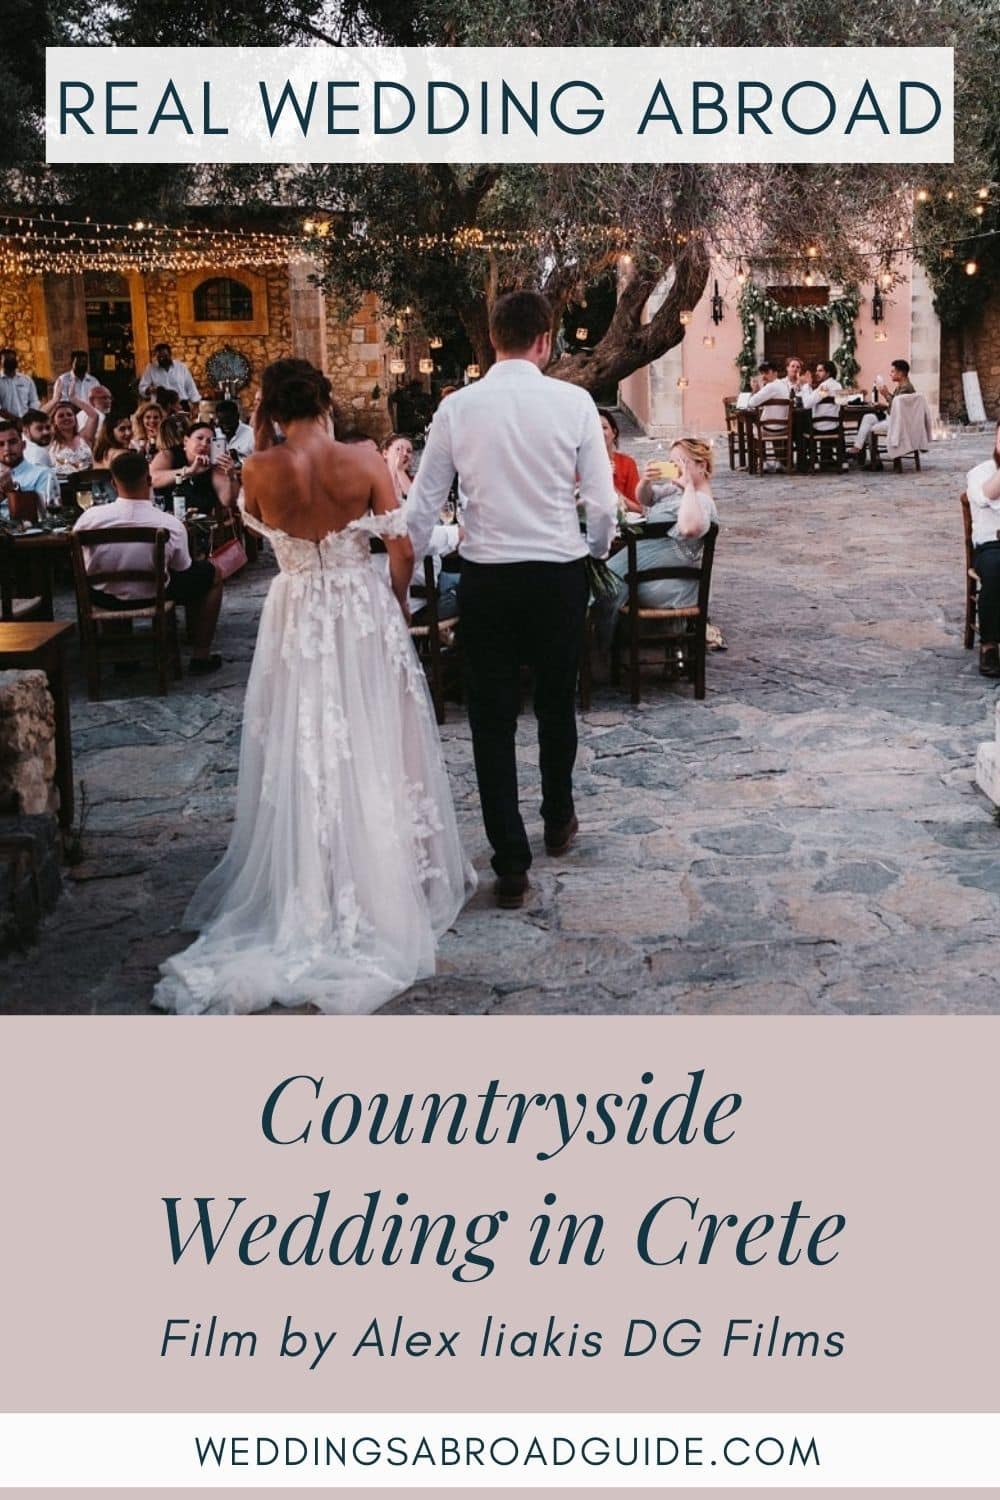 Countryside Wedding Abroad Crete, Greece | Wedding Film Alex Iiakis